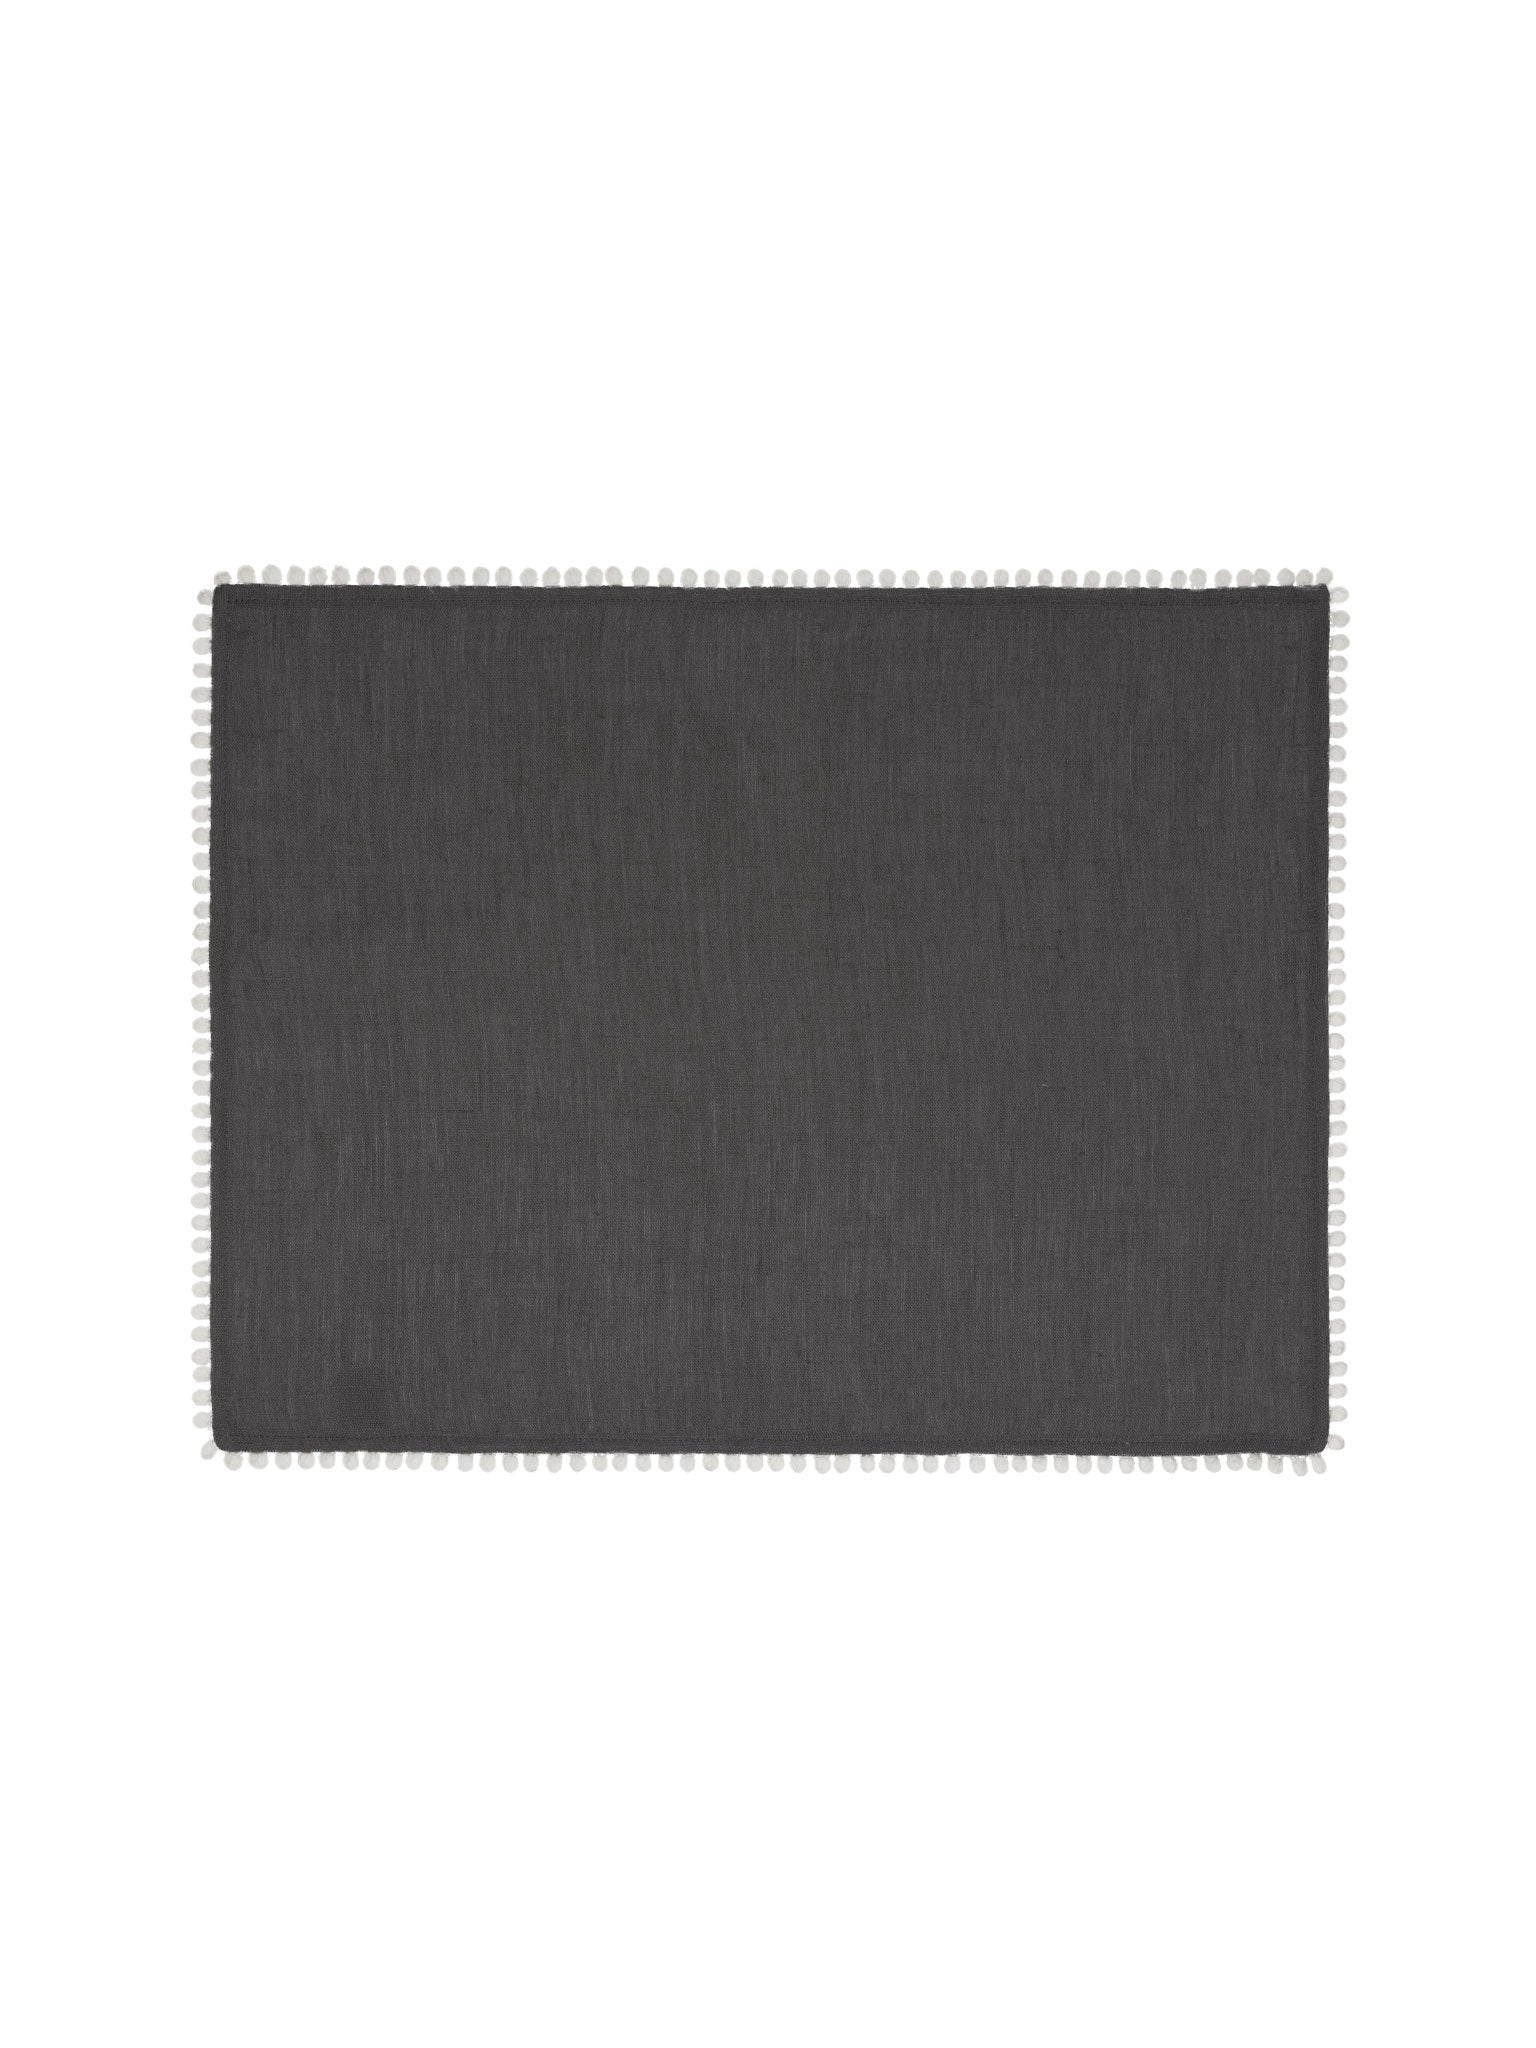 Charcoal Grey Linen Bobble Placemats